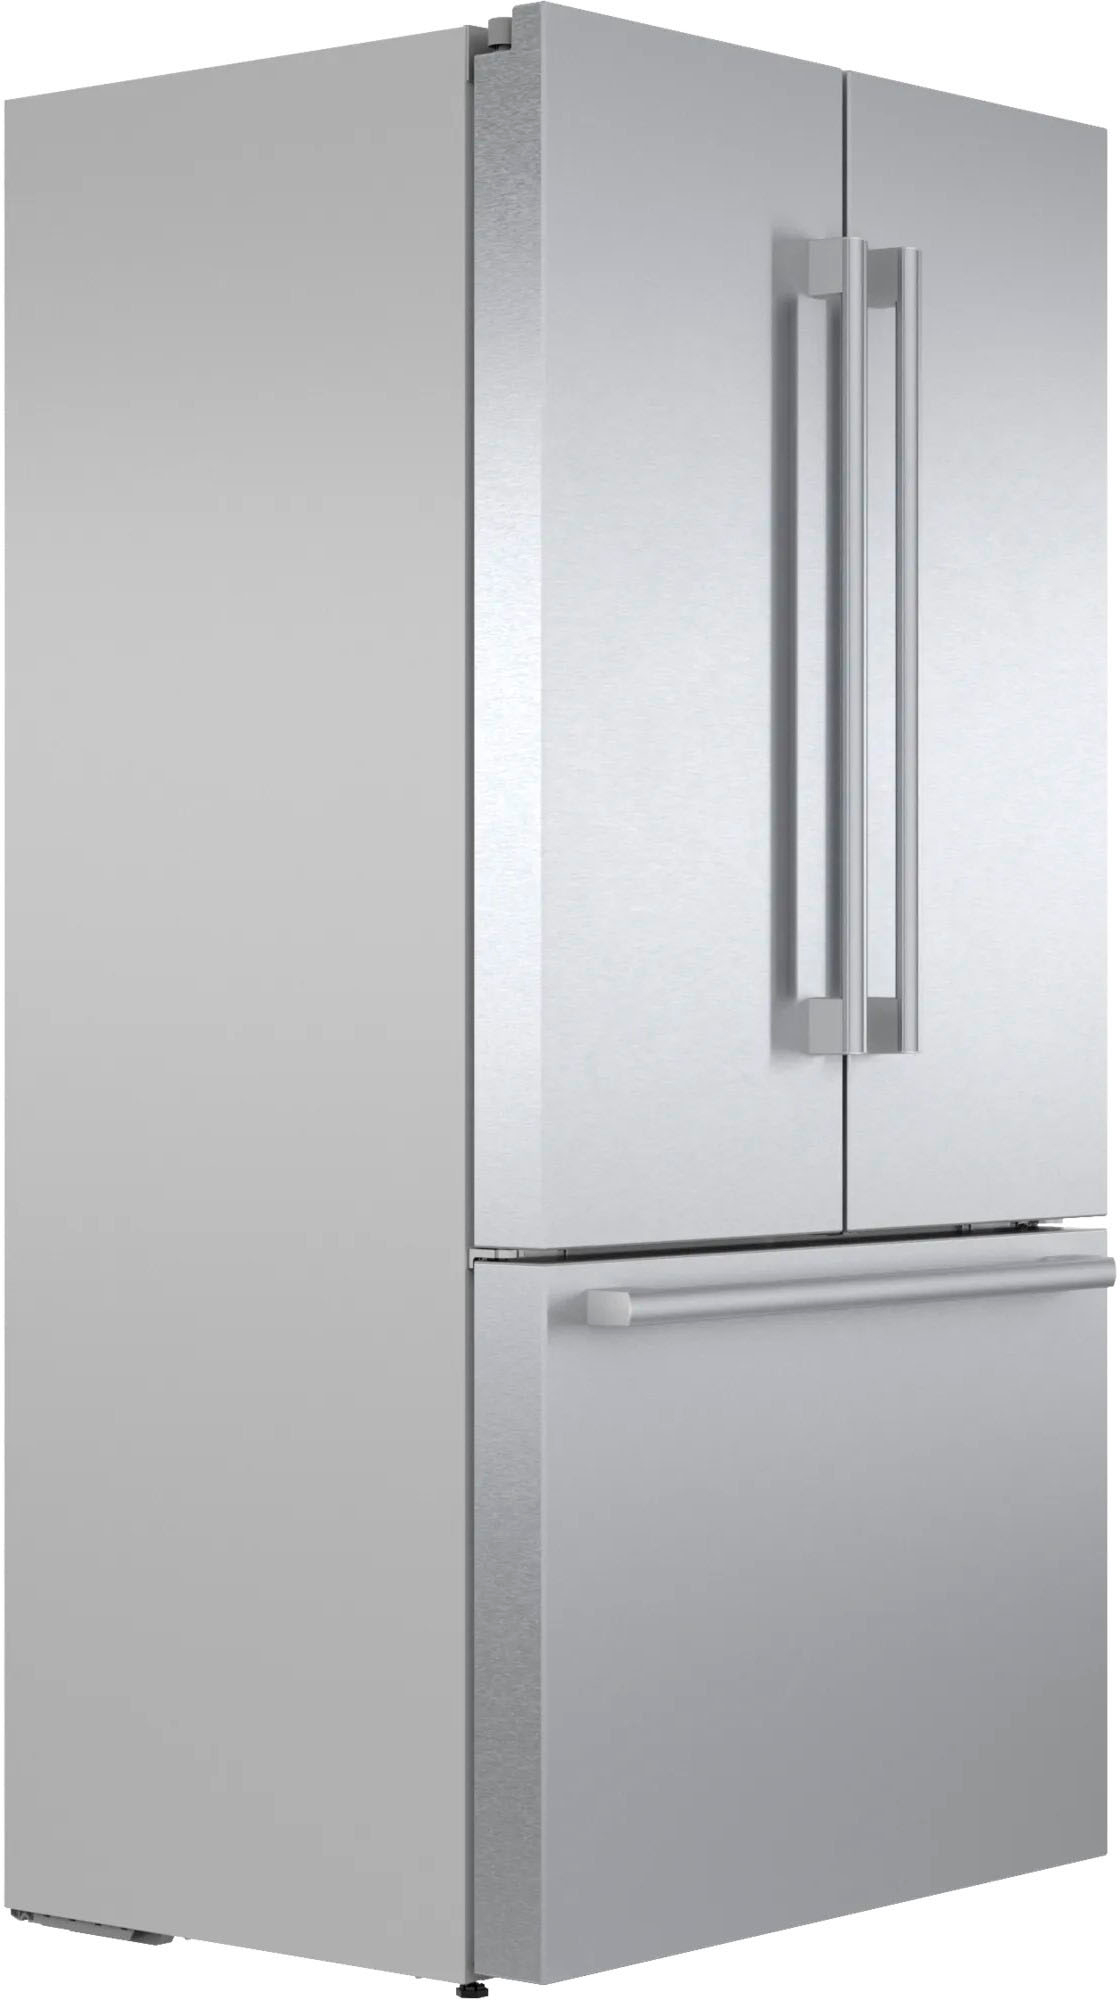 46+ Best buy visalia refrigerators information